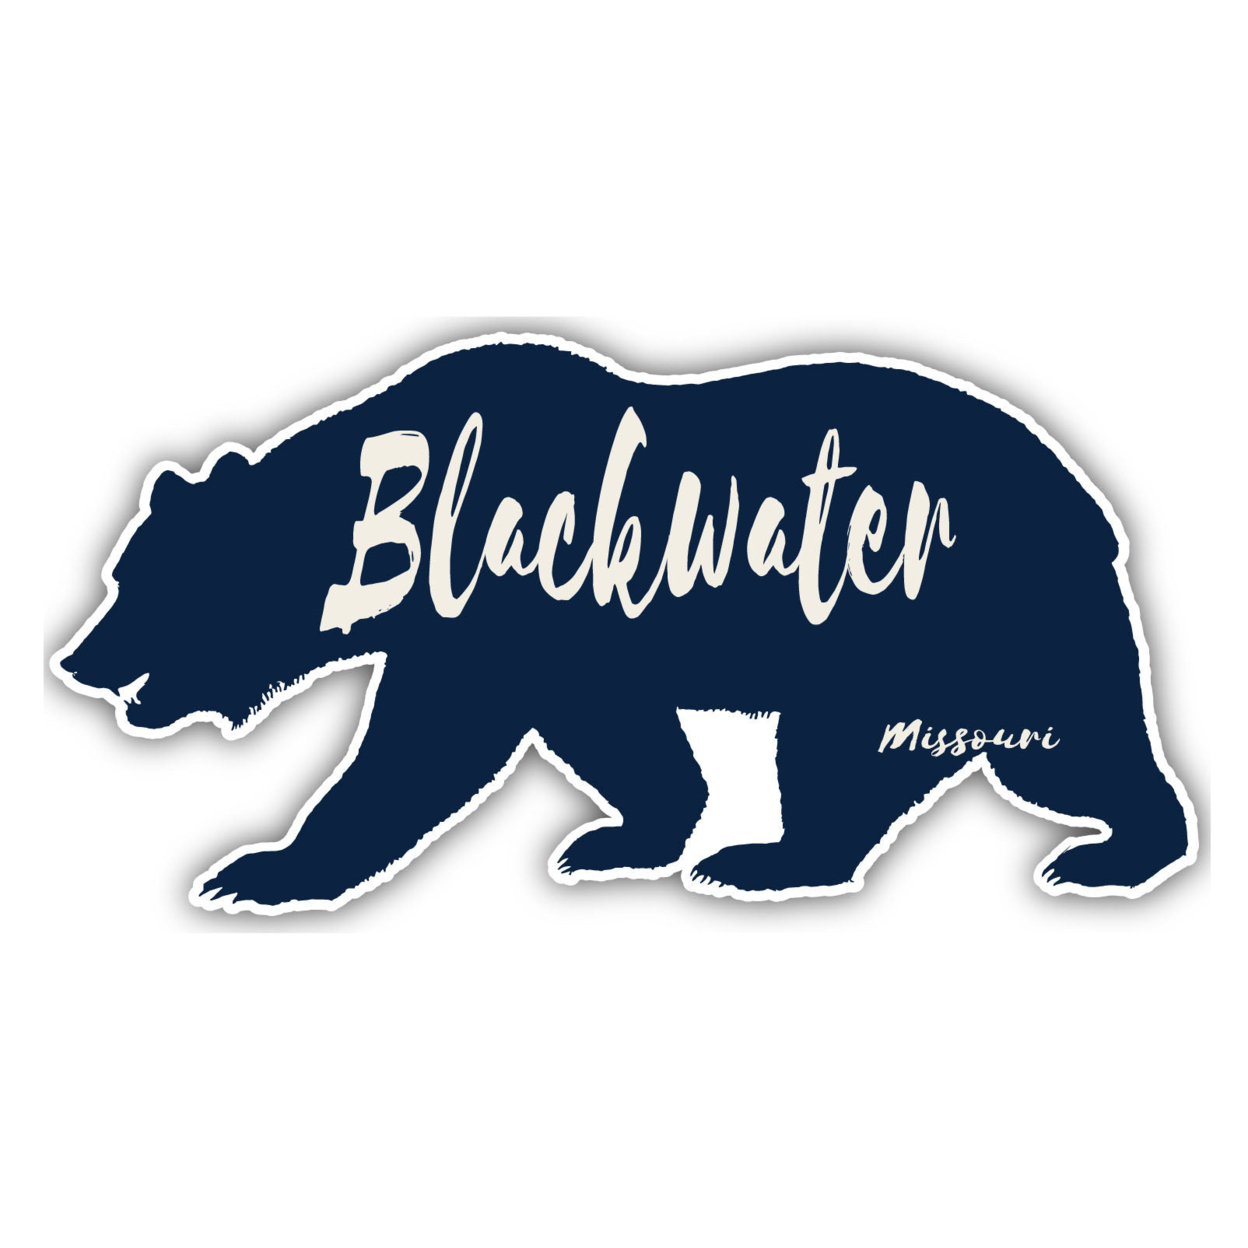 Blackwater Missouri Souvenir Decorative Stickers (Choose Theme And Size) - Single Unit, 4-Inch, Bear